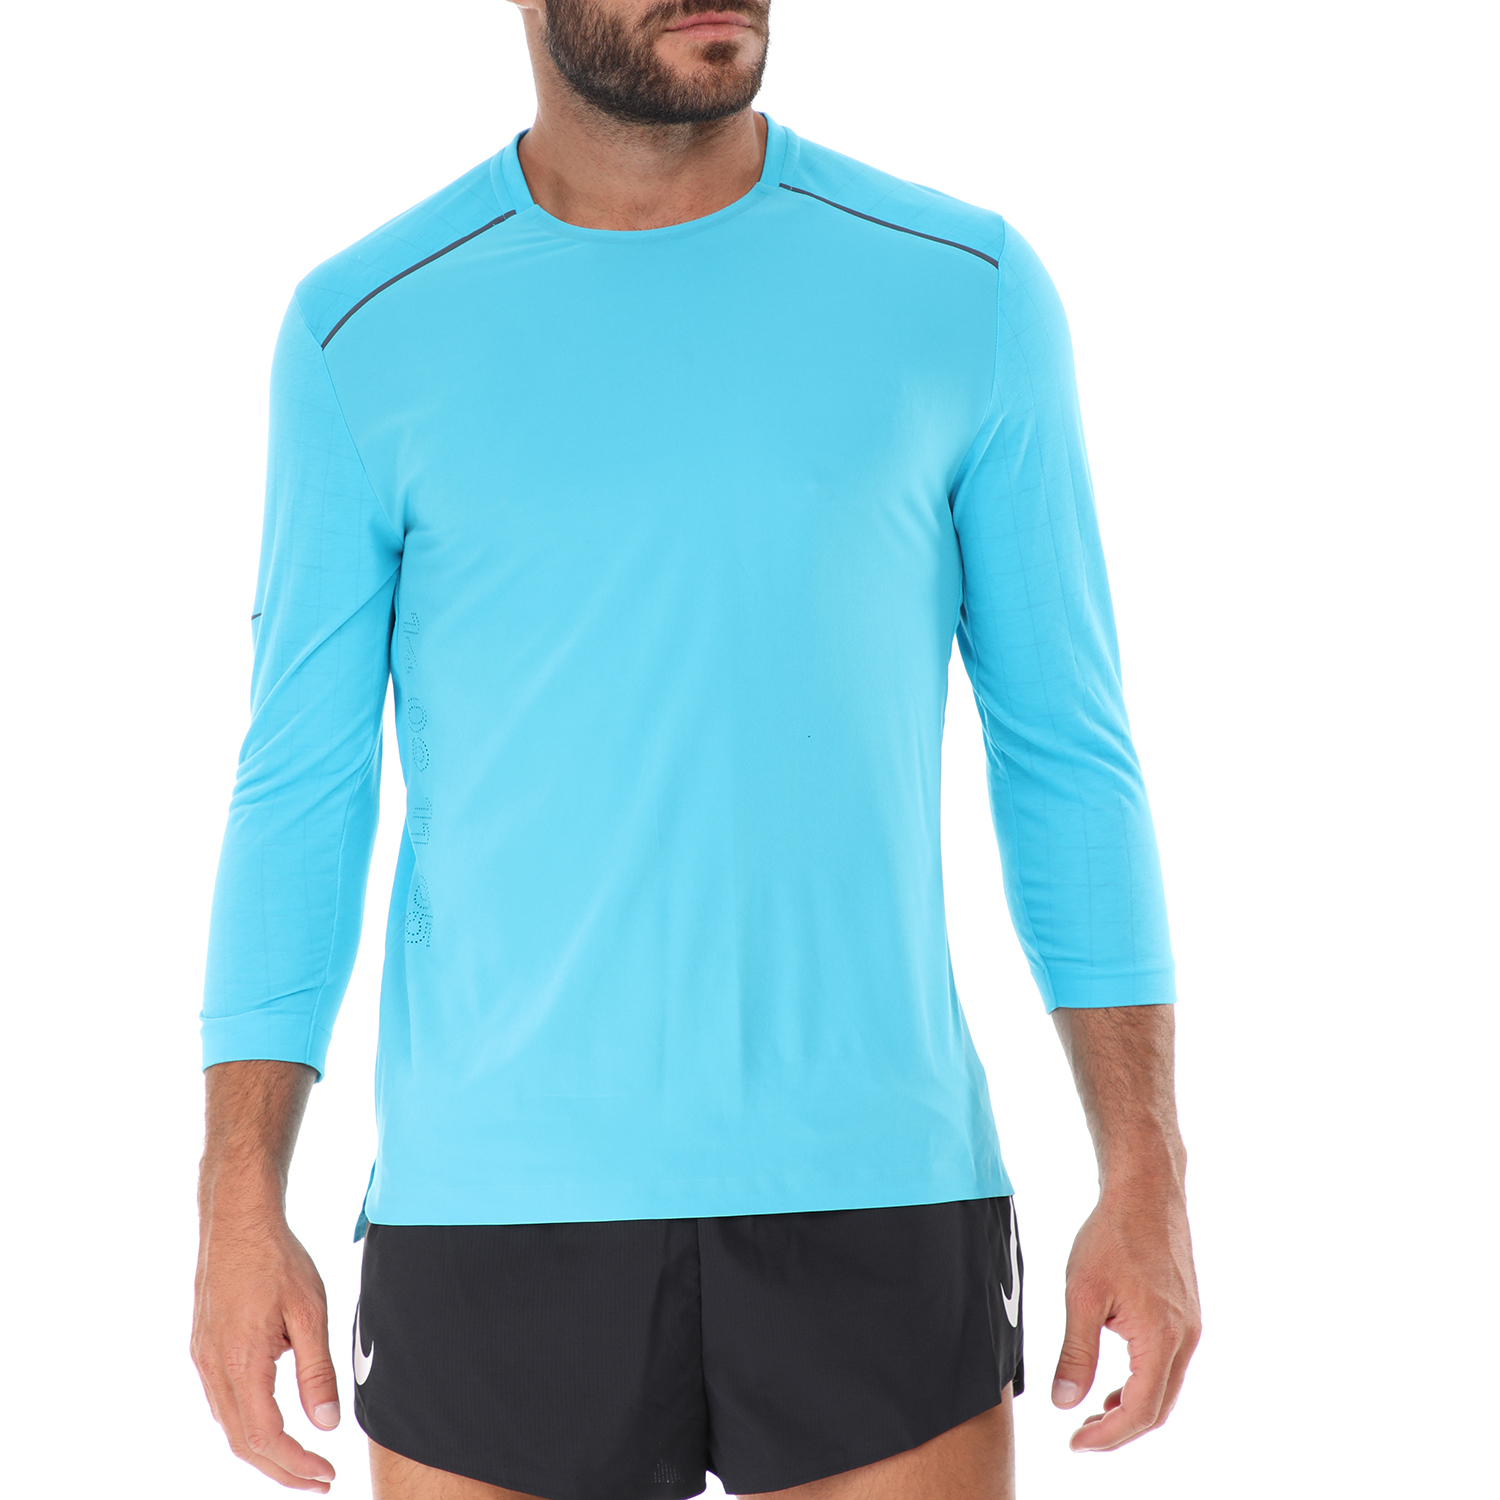 NIKE - Ανδρική μπλούζα για τρέξιμο Nike BRTHE RISE 365 3QTR TCH PCK μπλε Ανδρικά/Ρούχα/Αθλητικά/Φούτερ-Μακρυμάνικα